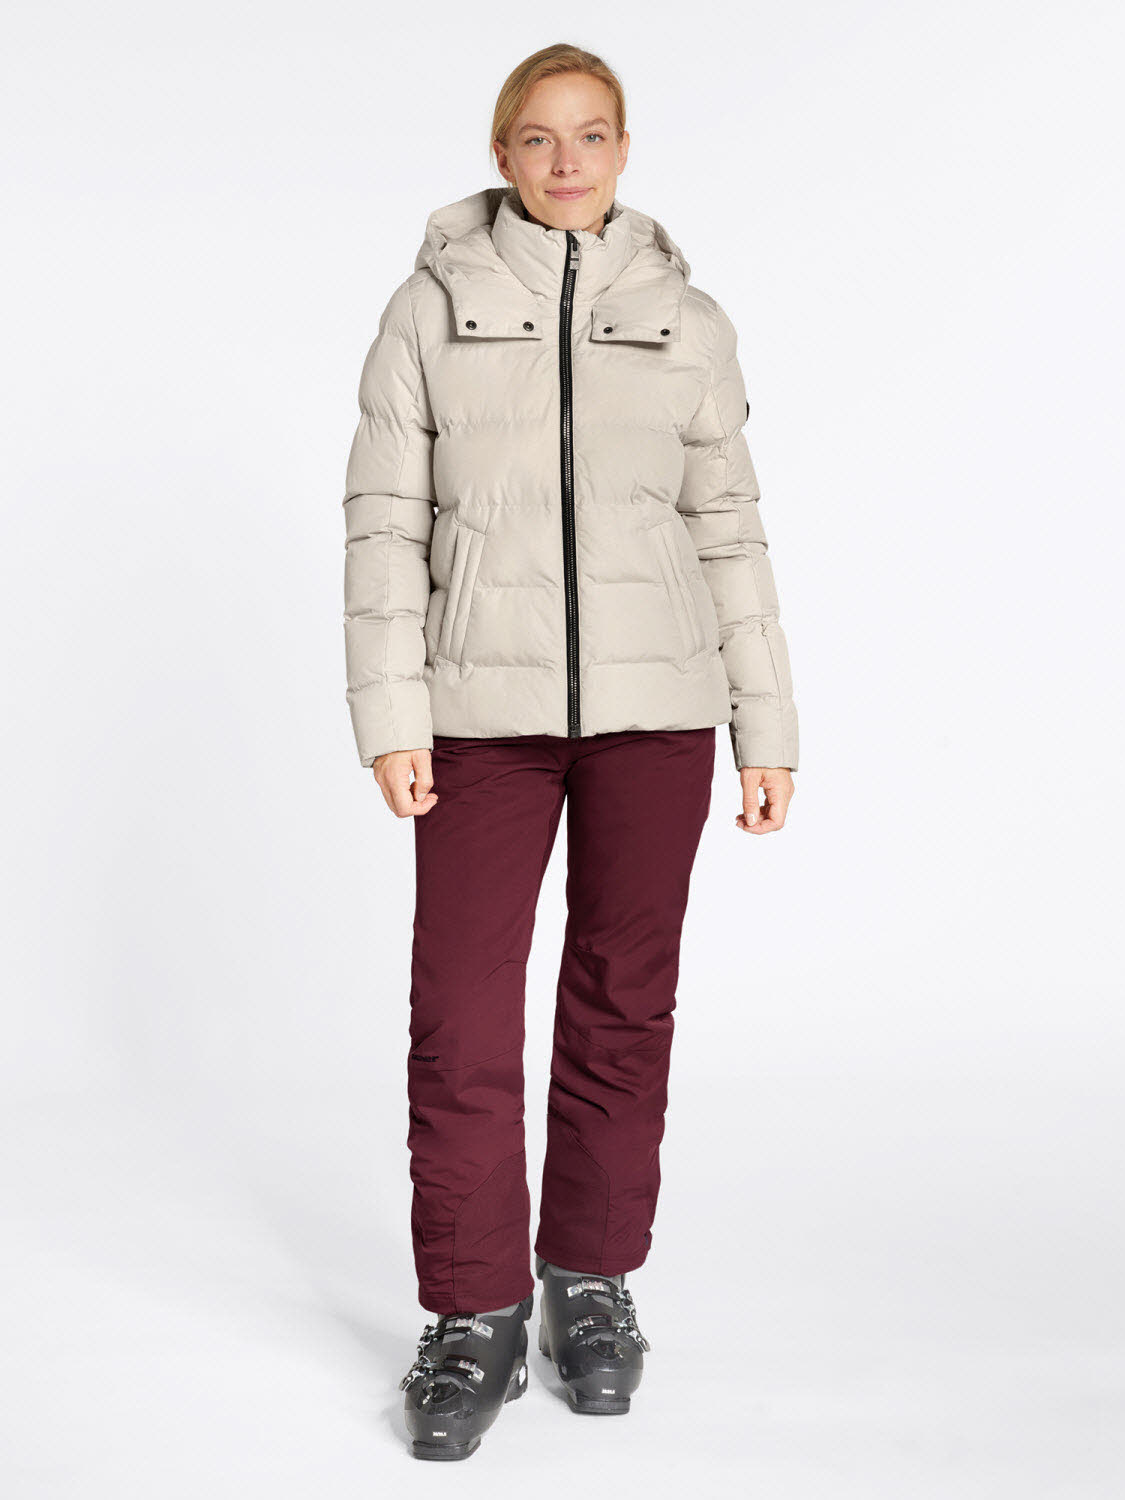 Ziener TUSJA lady (jacket ski)